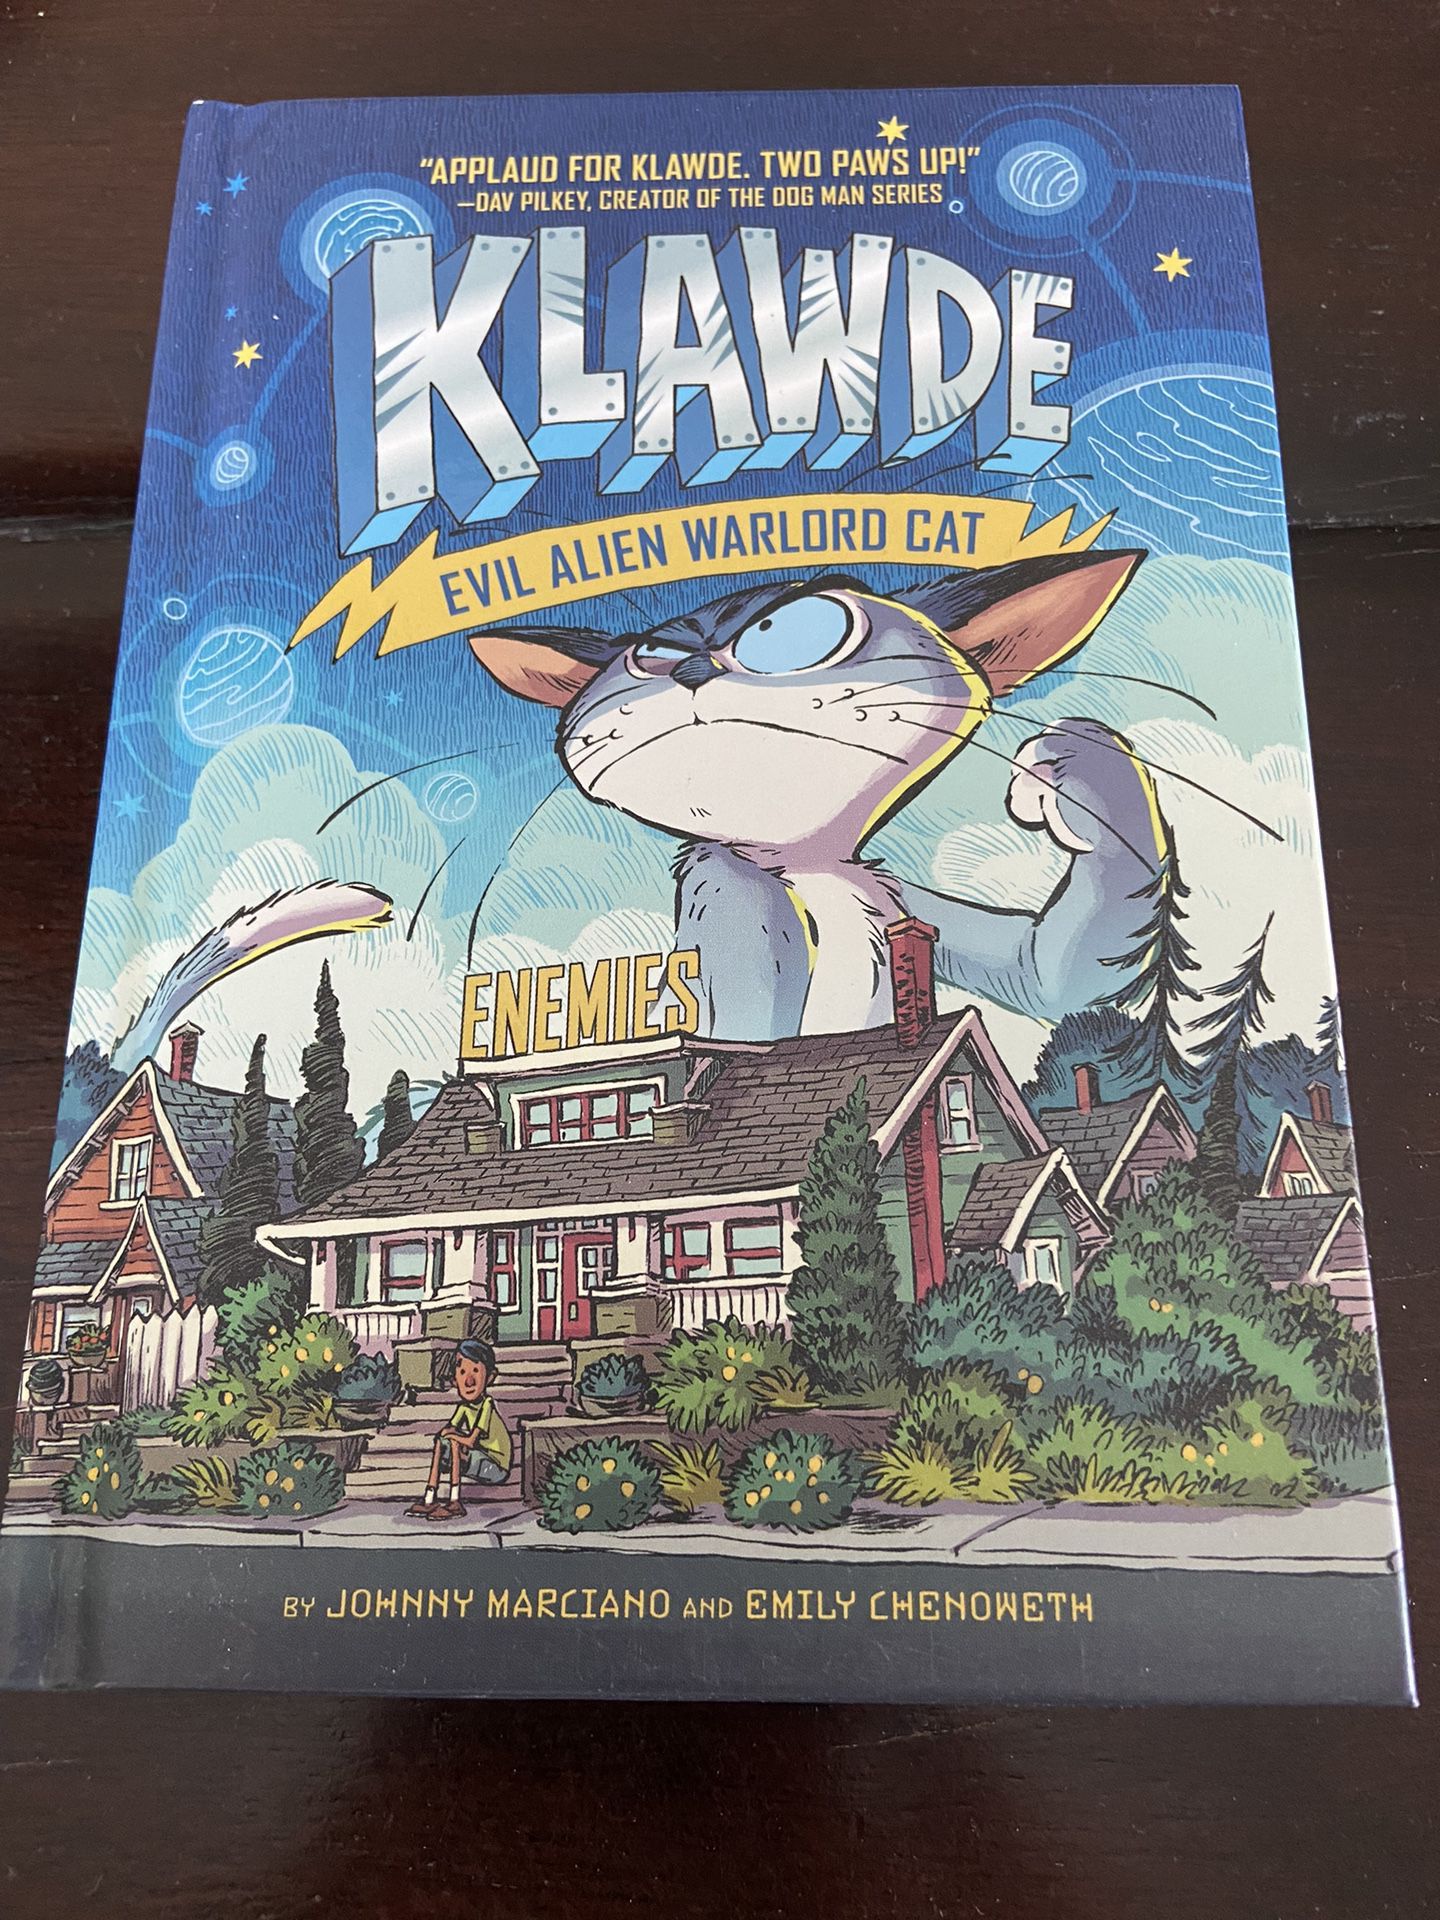 Klawde Book, New